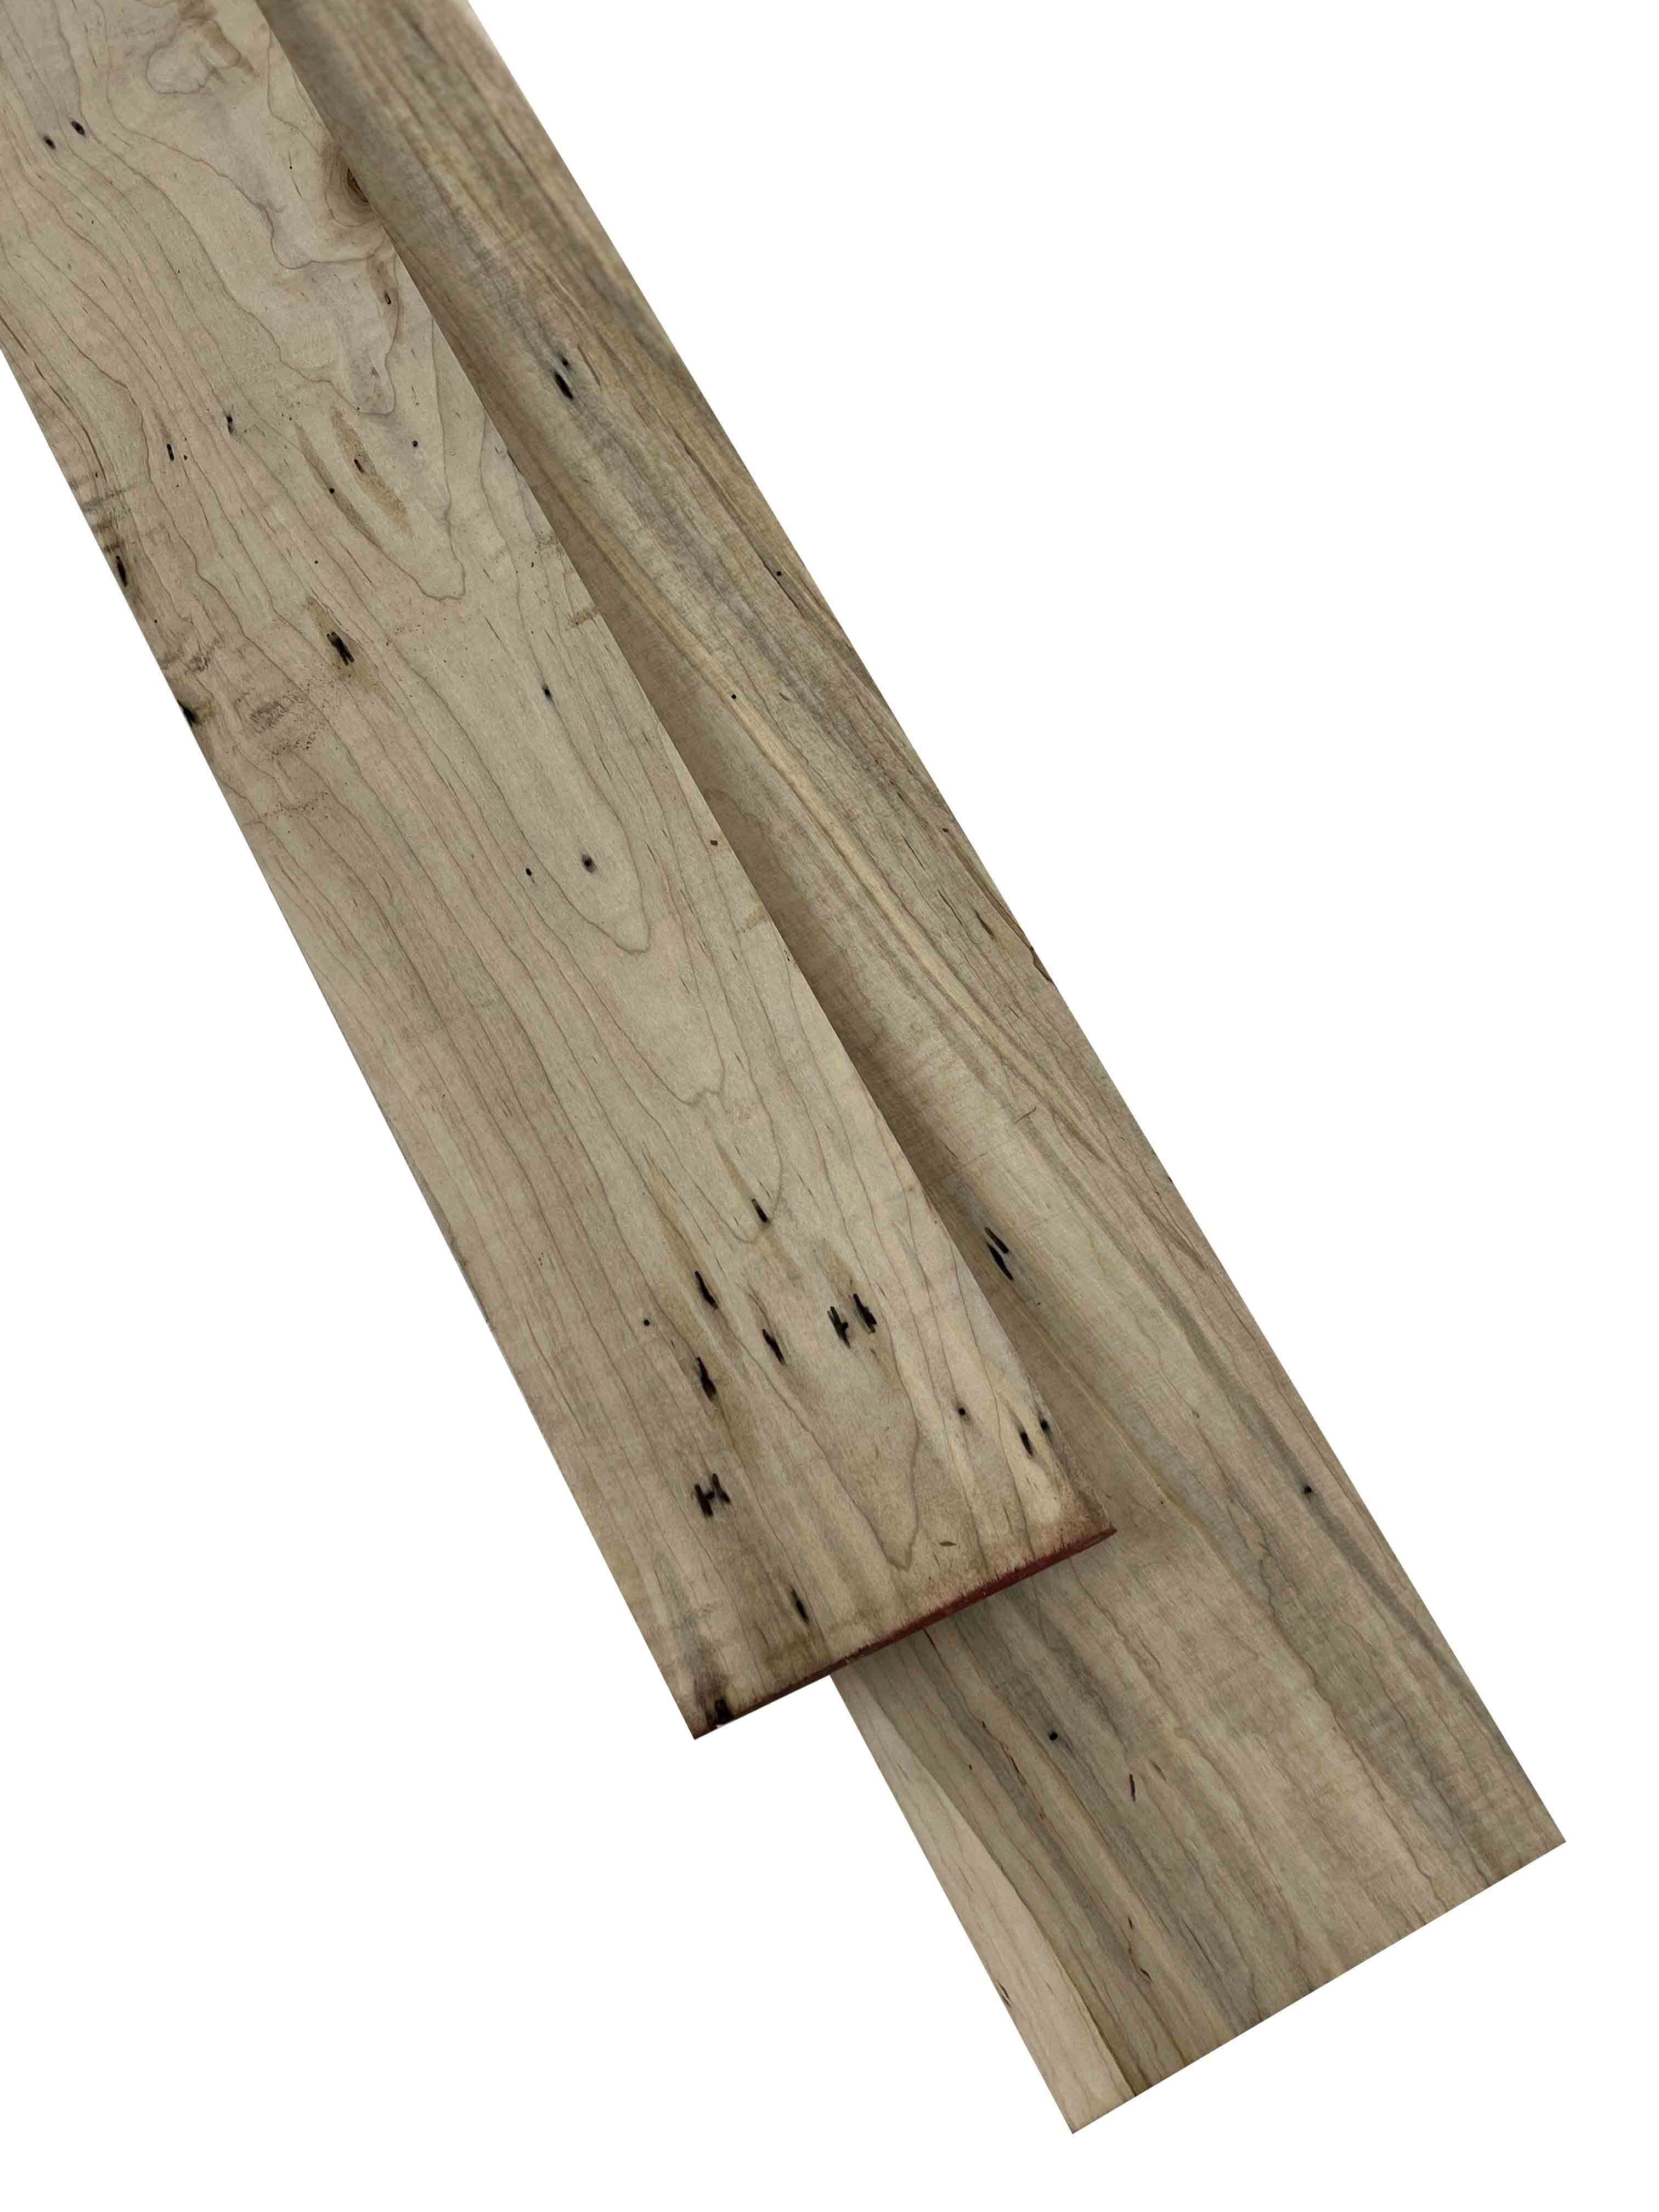 Premium Ambrosia Maple Lumbers 8/4 - Exotic Wood Zone - Buy online Across USA 